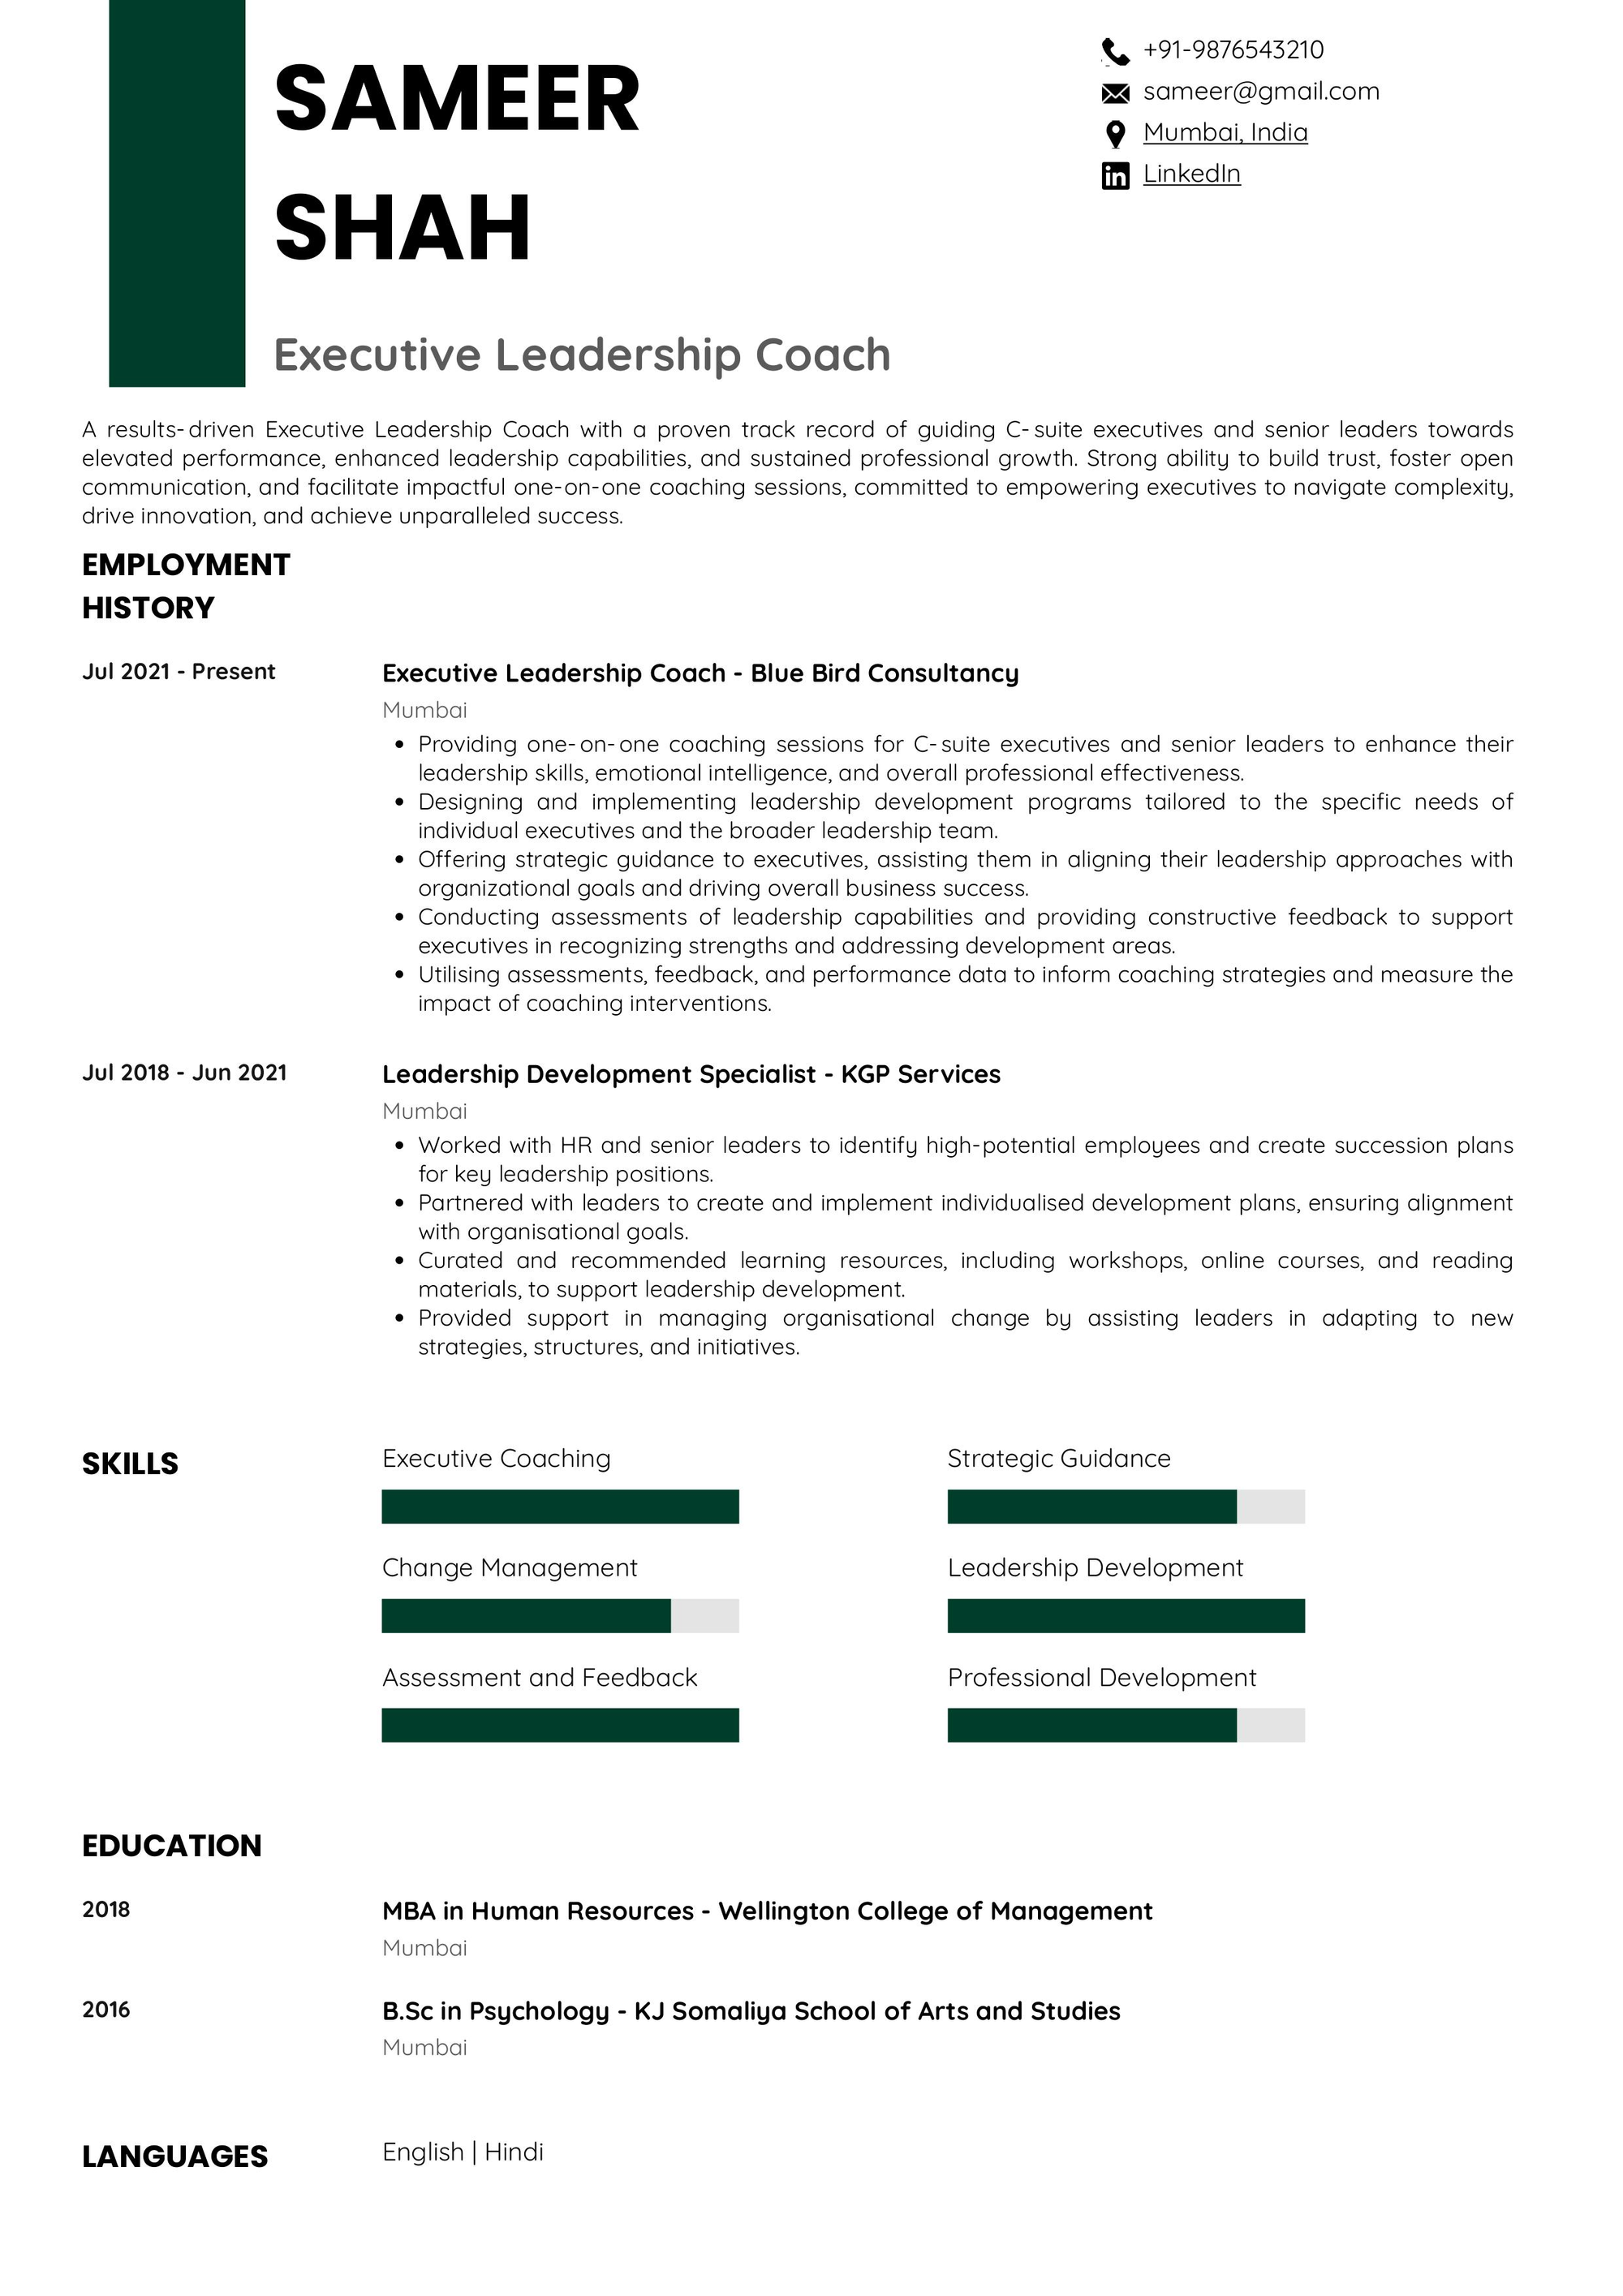 Resume of Executive Leadership Coach built on Resumod